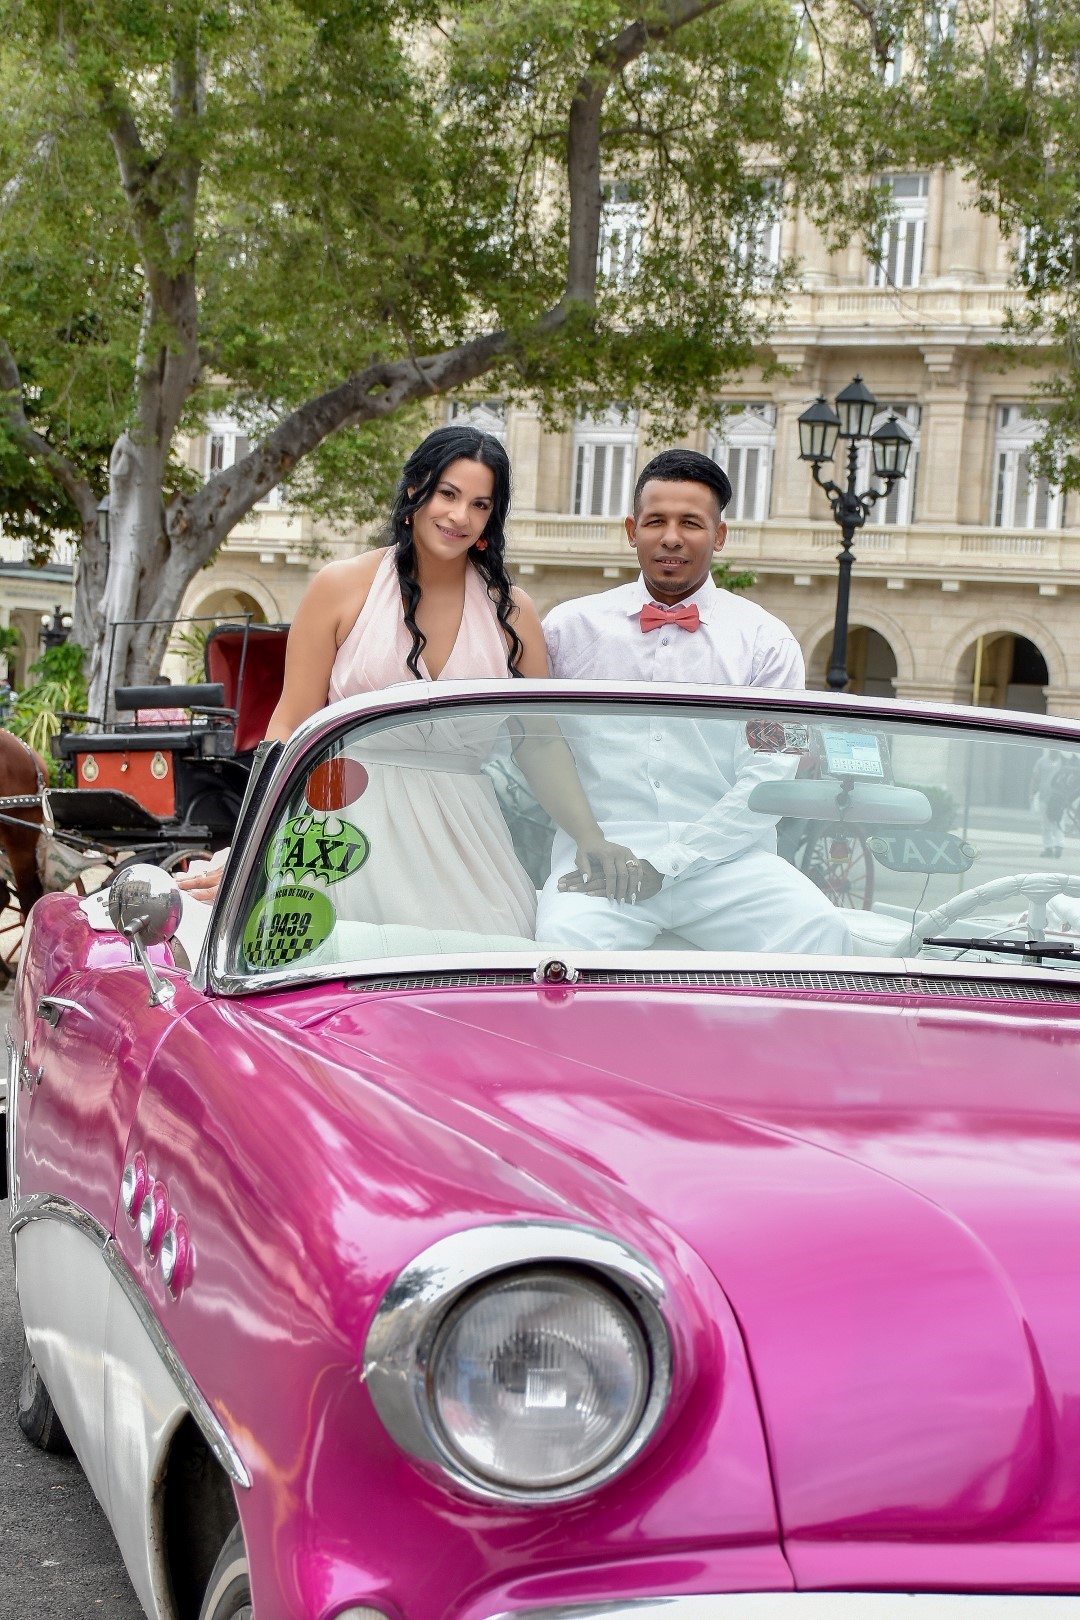 tradición de paseo en auto en las bodas cubanas